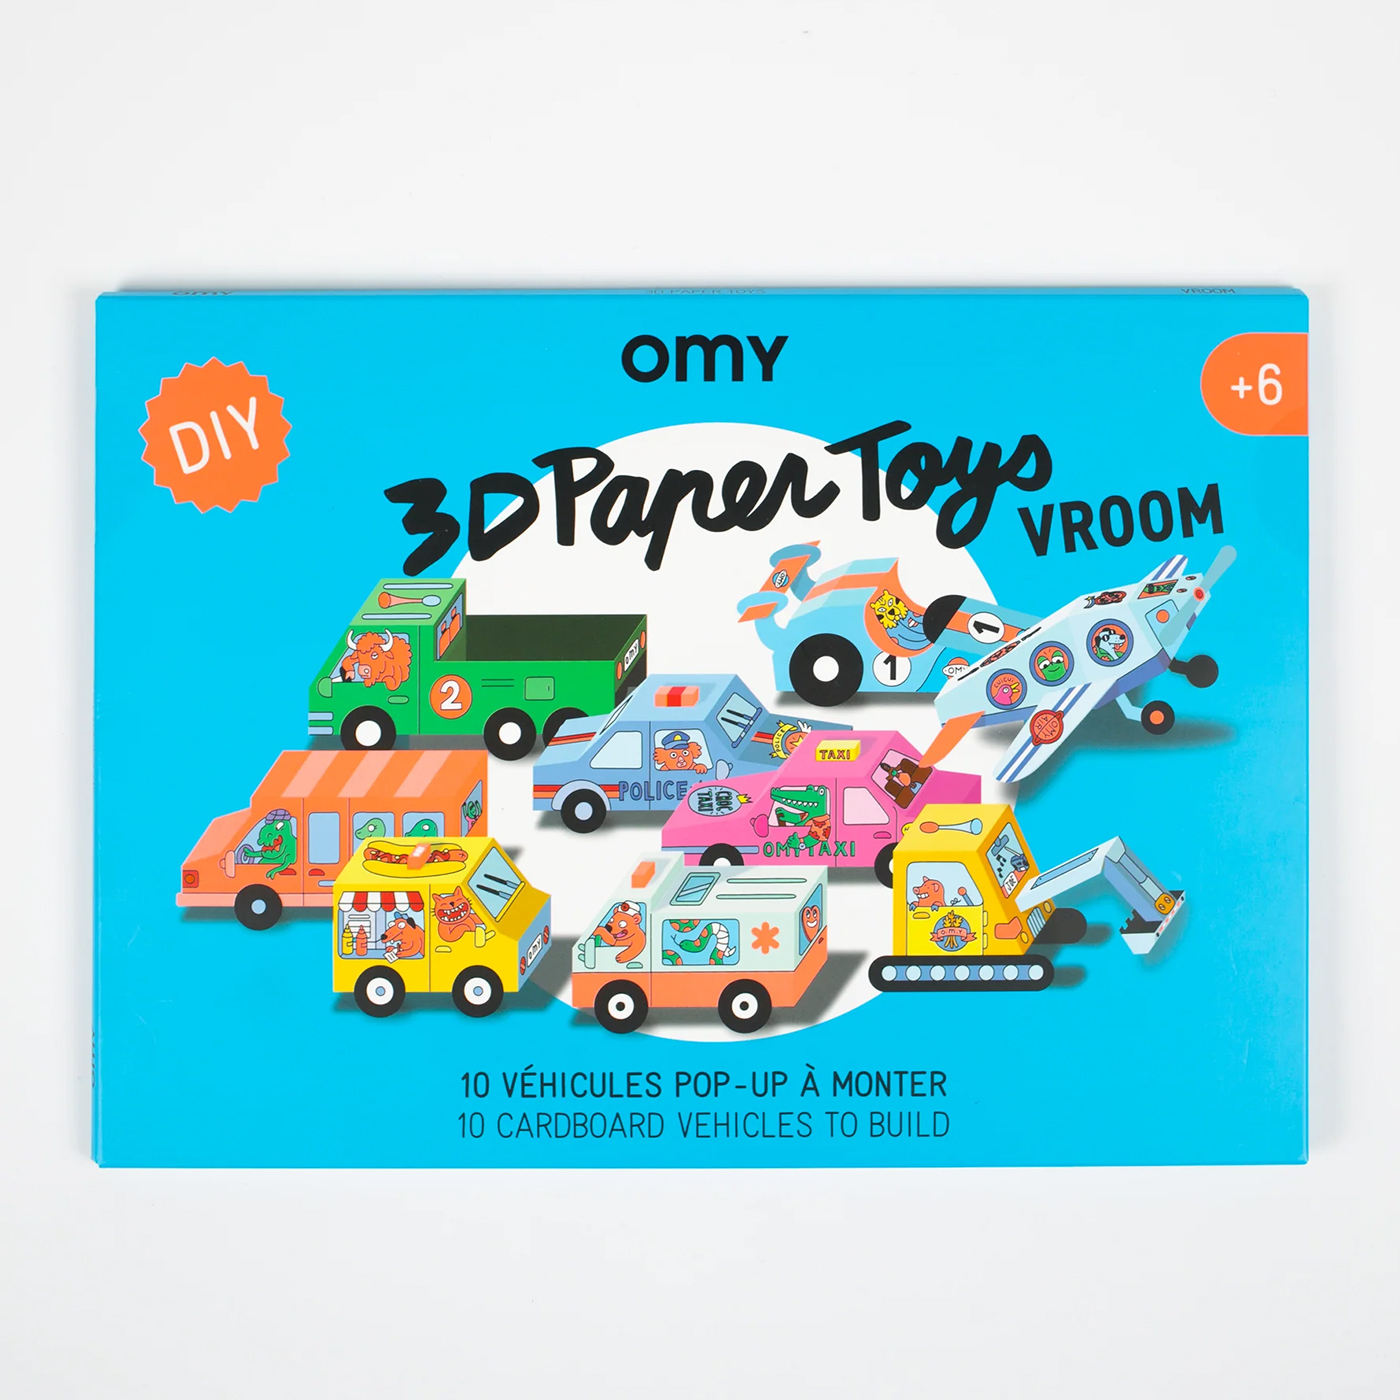 OMY Omy 3D Paper Toys | Vroom